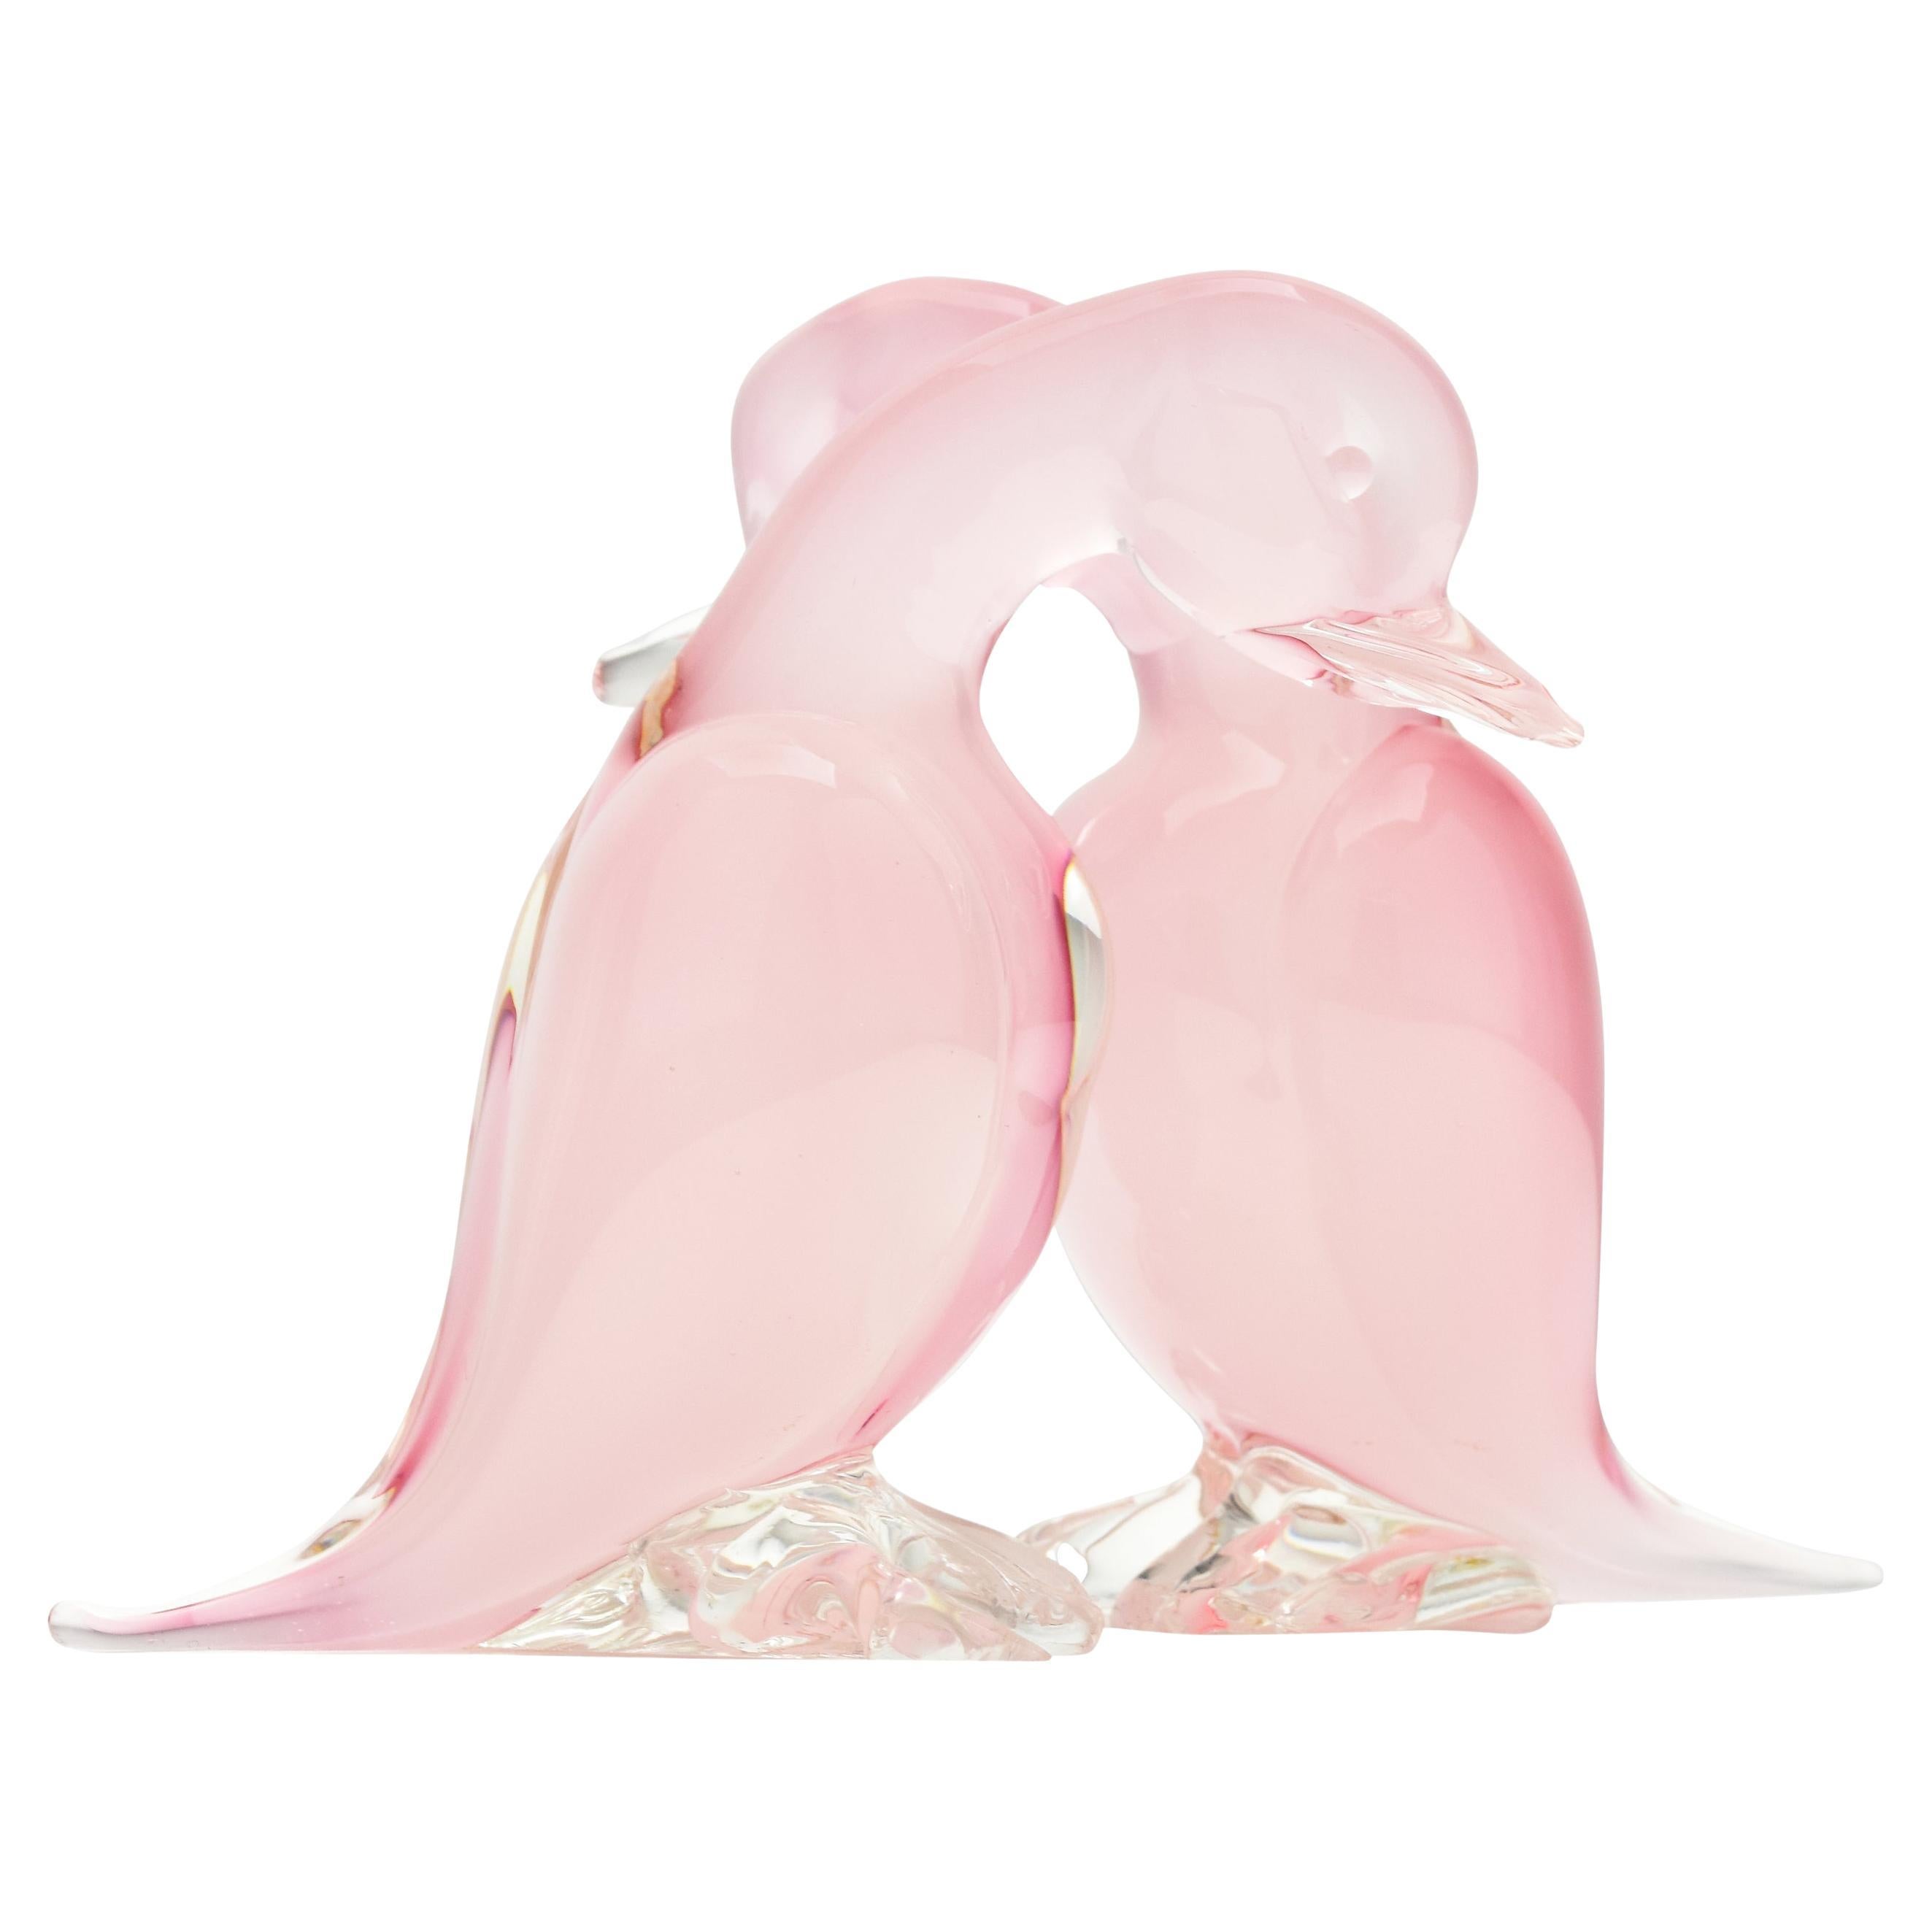 Seguso Duck Loving Couple Figurines Pink Alabastro Murano Studio Art Glass